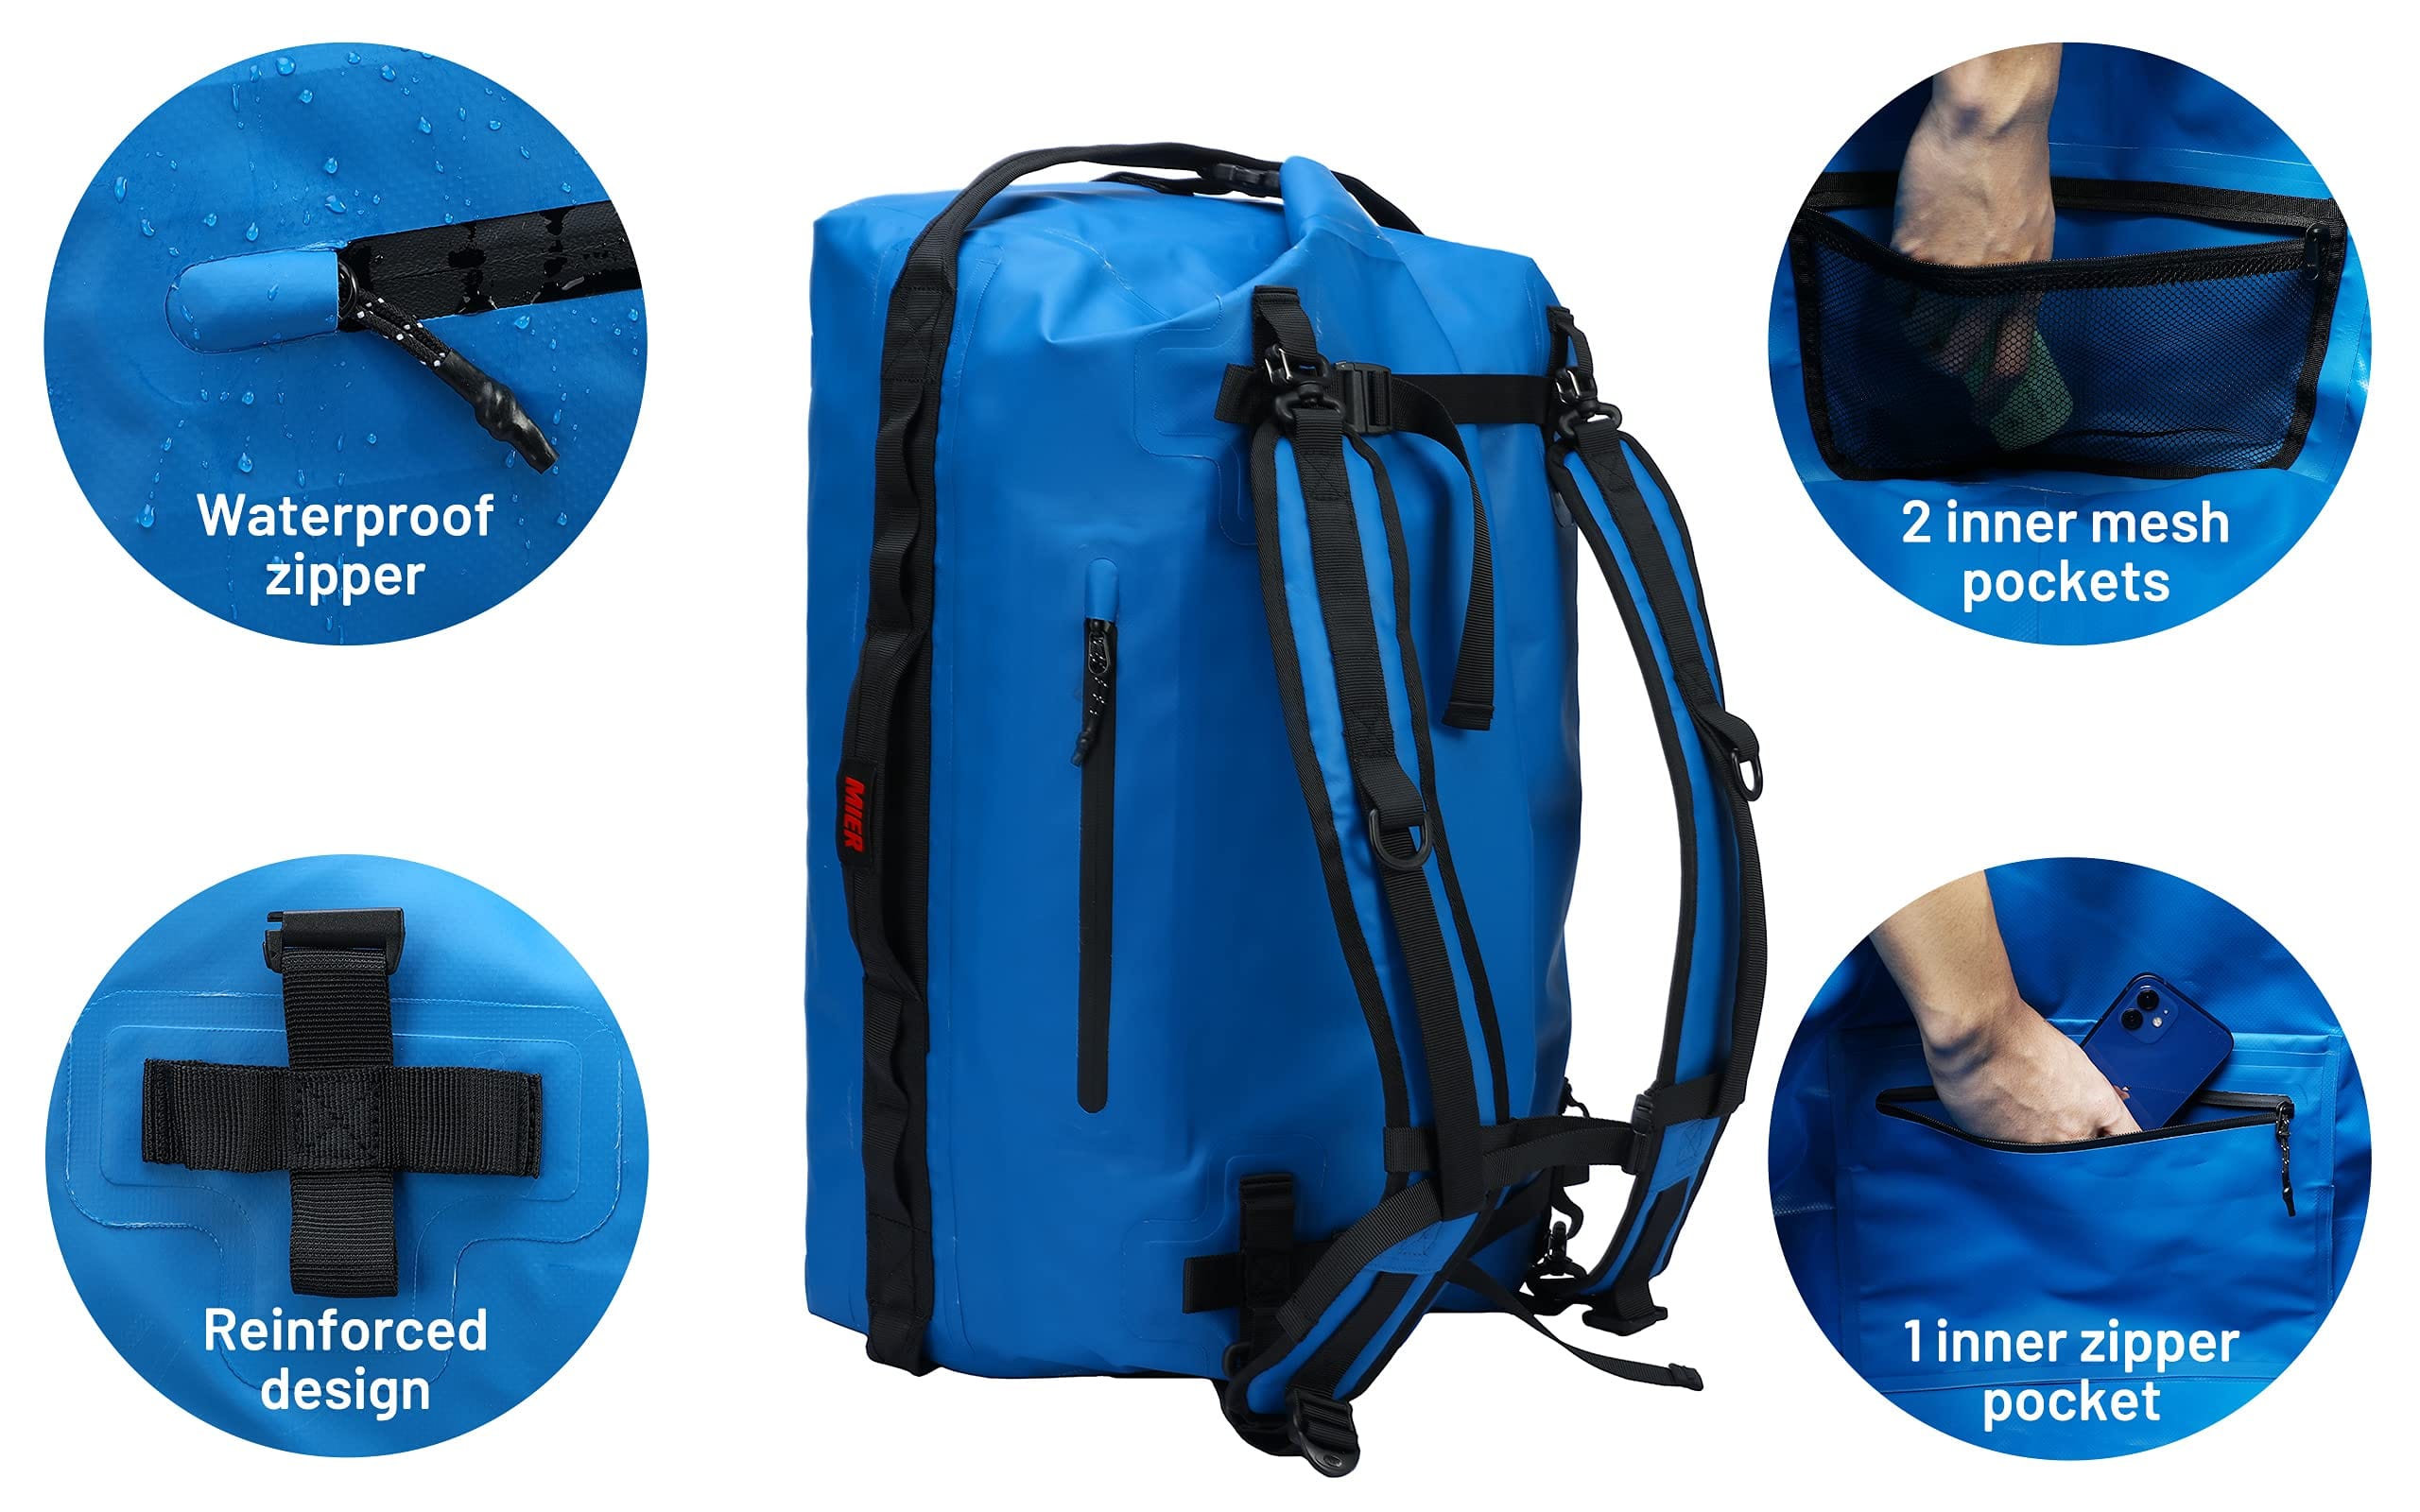 15 Liter Heavy Duty Waterproof Dry Bag